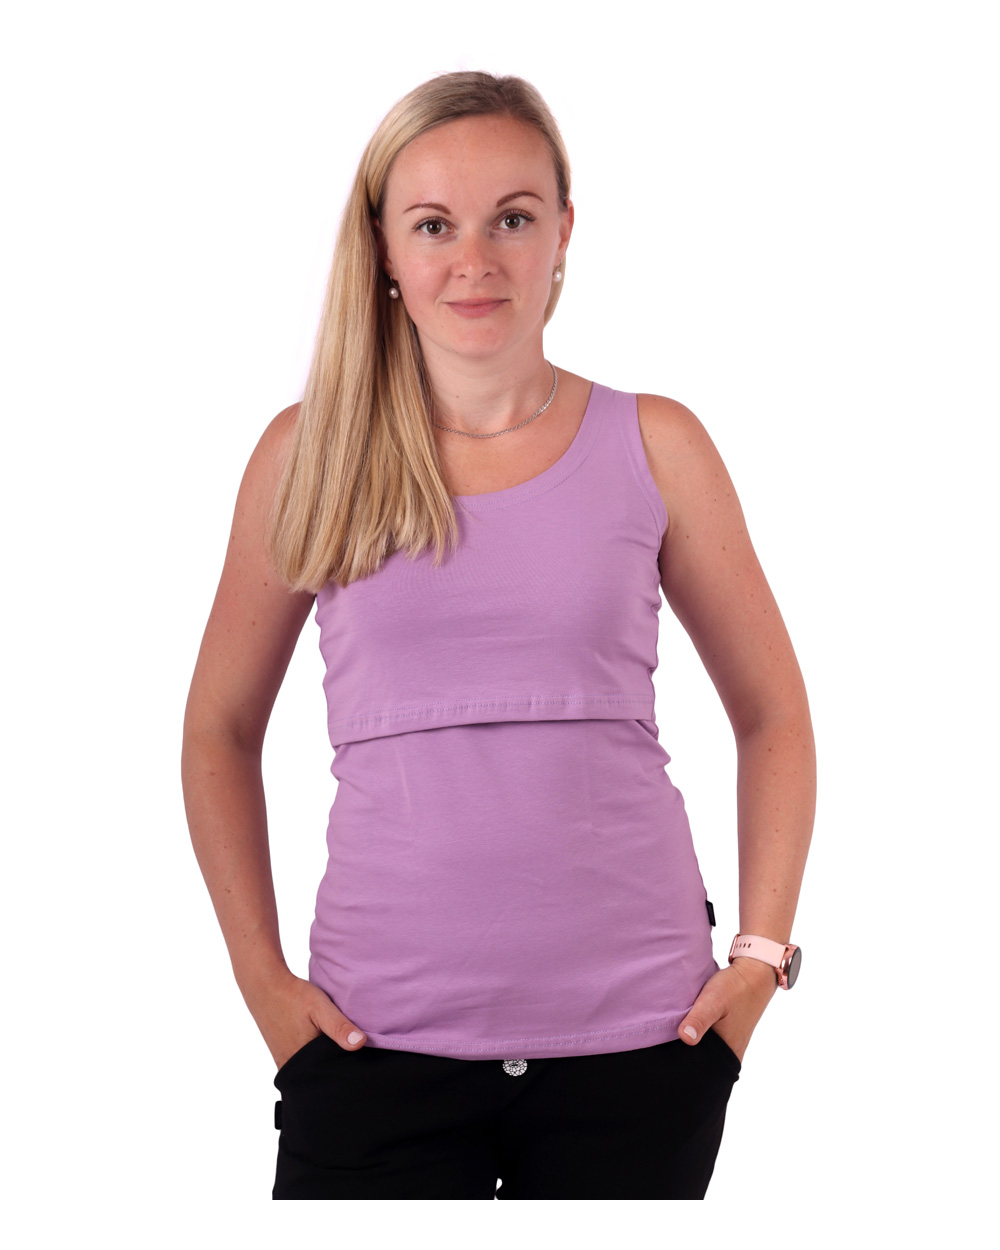 Breast-feeding T-shirt Katerina, no sleevess, LAVENDER